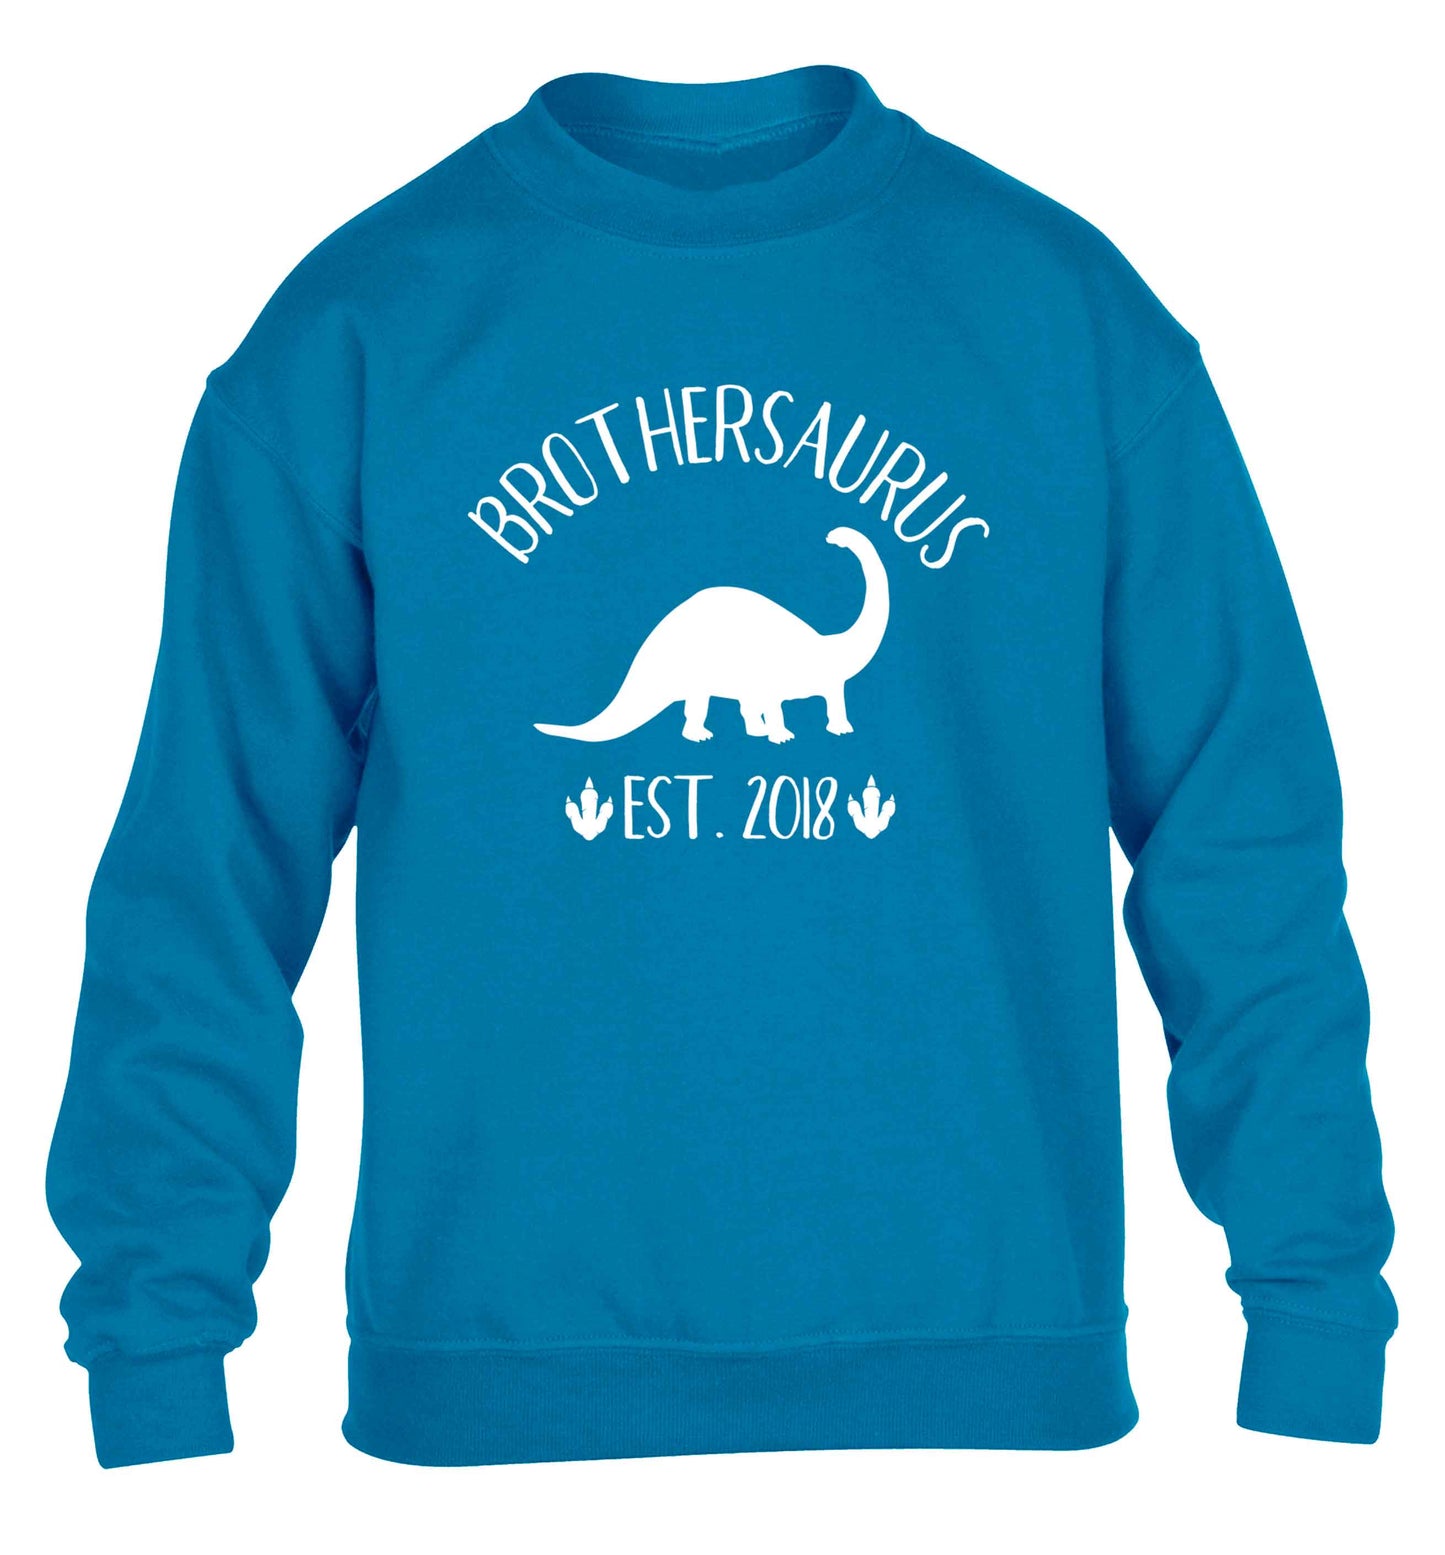 Personalised brothersaurus since (custom date) children's blue sweater 12-13 Years